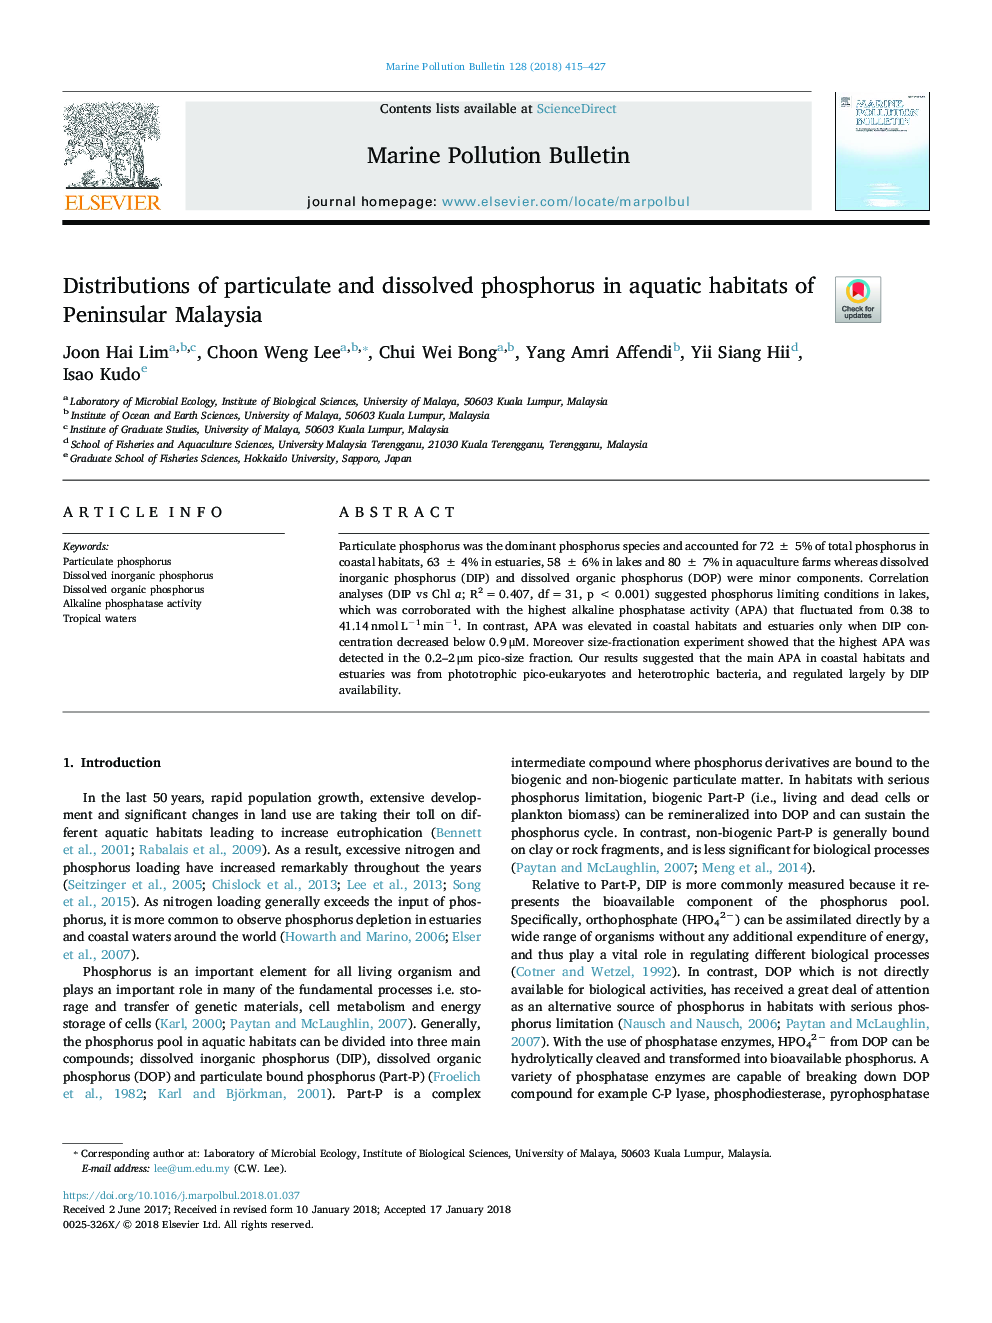 Distributions of particulate and dissolved phosphorus in aquatic habitats of Peninsular Malaysia